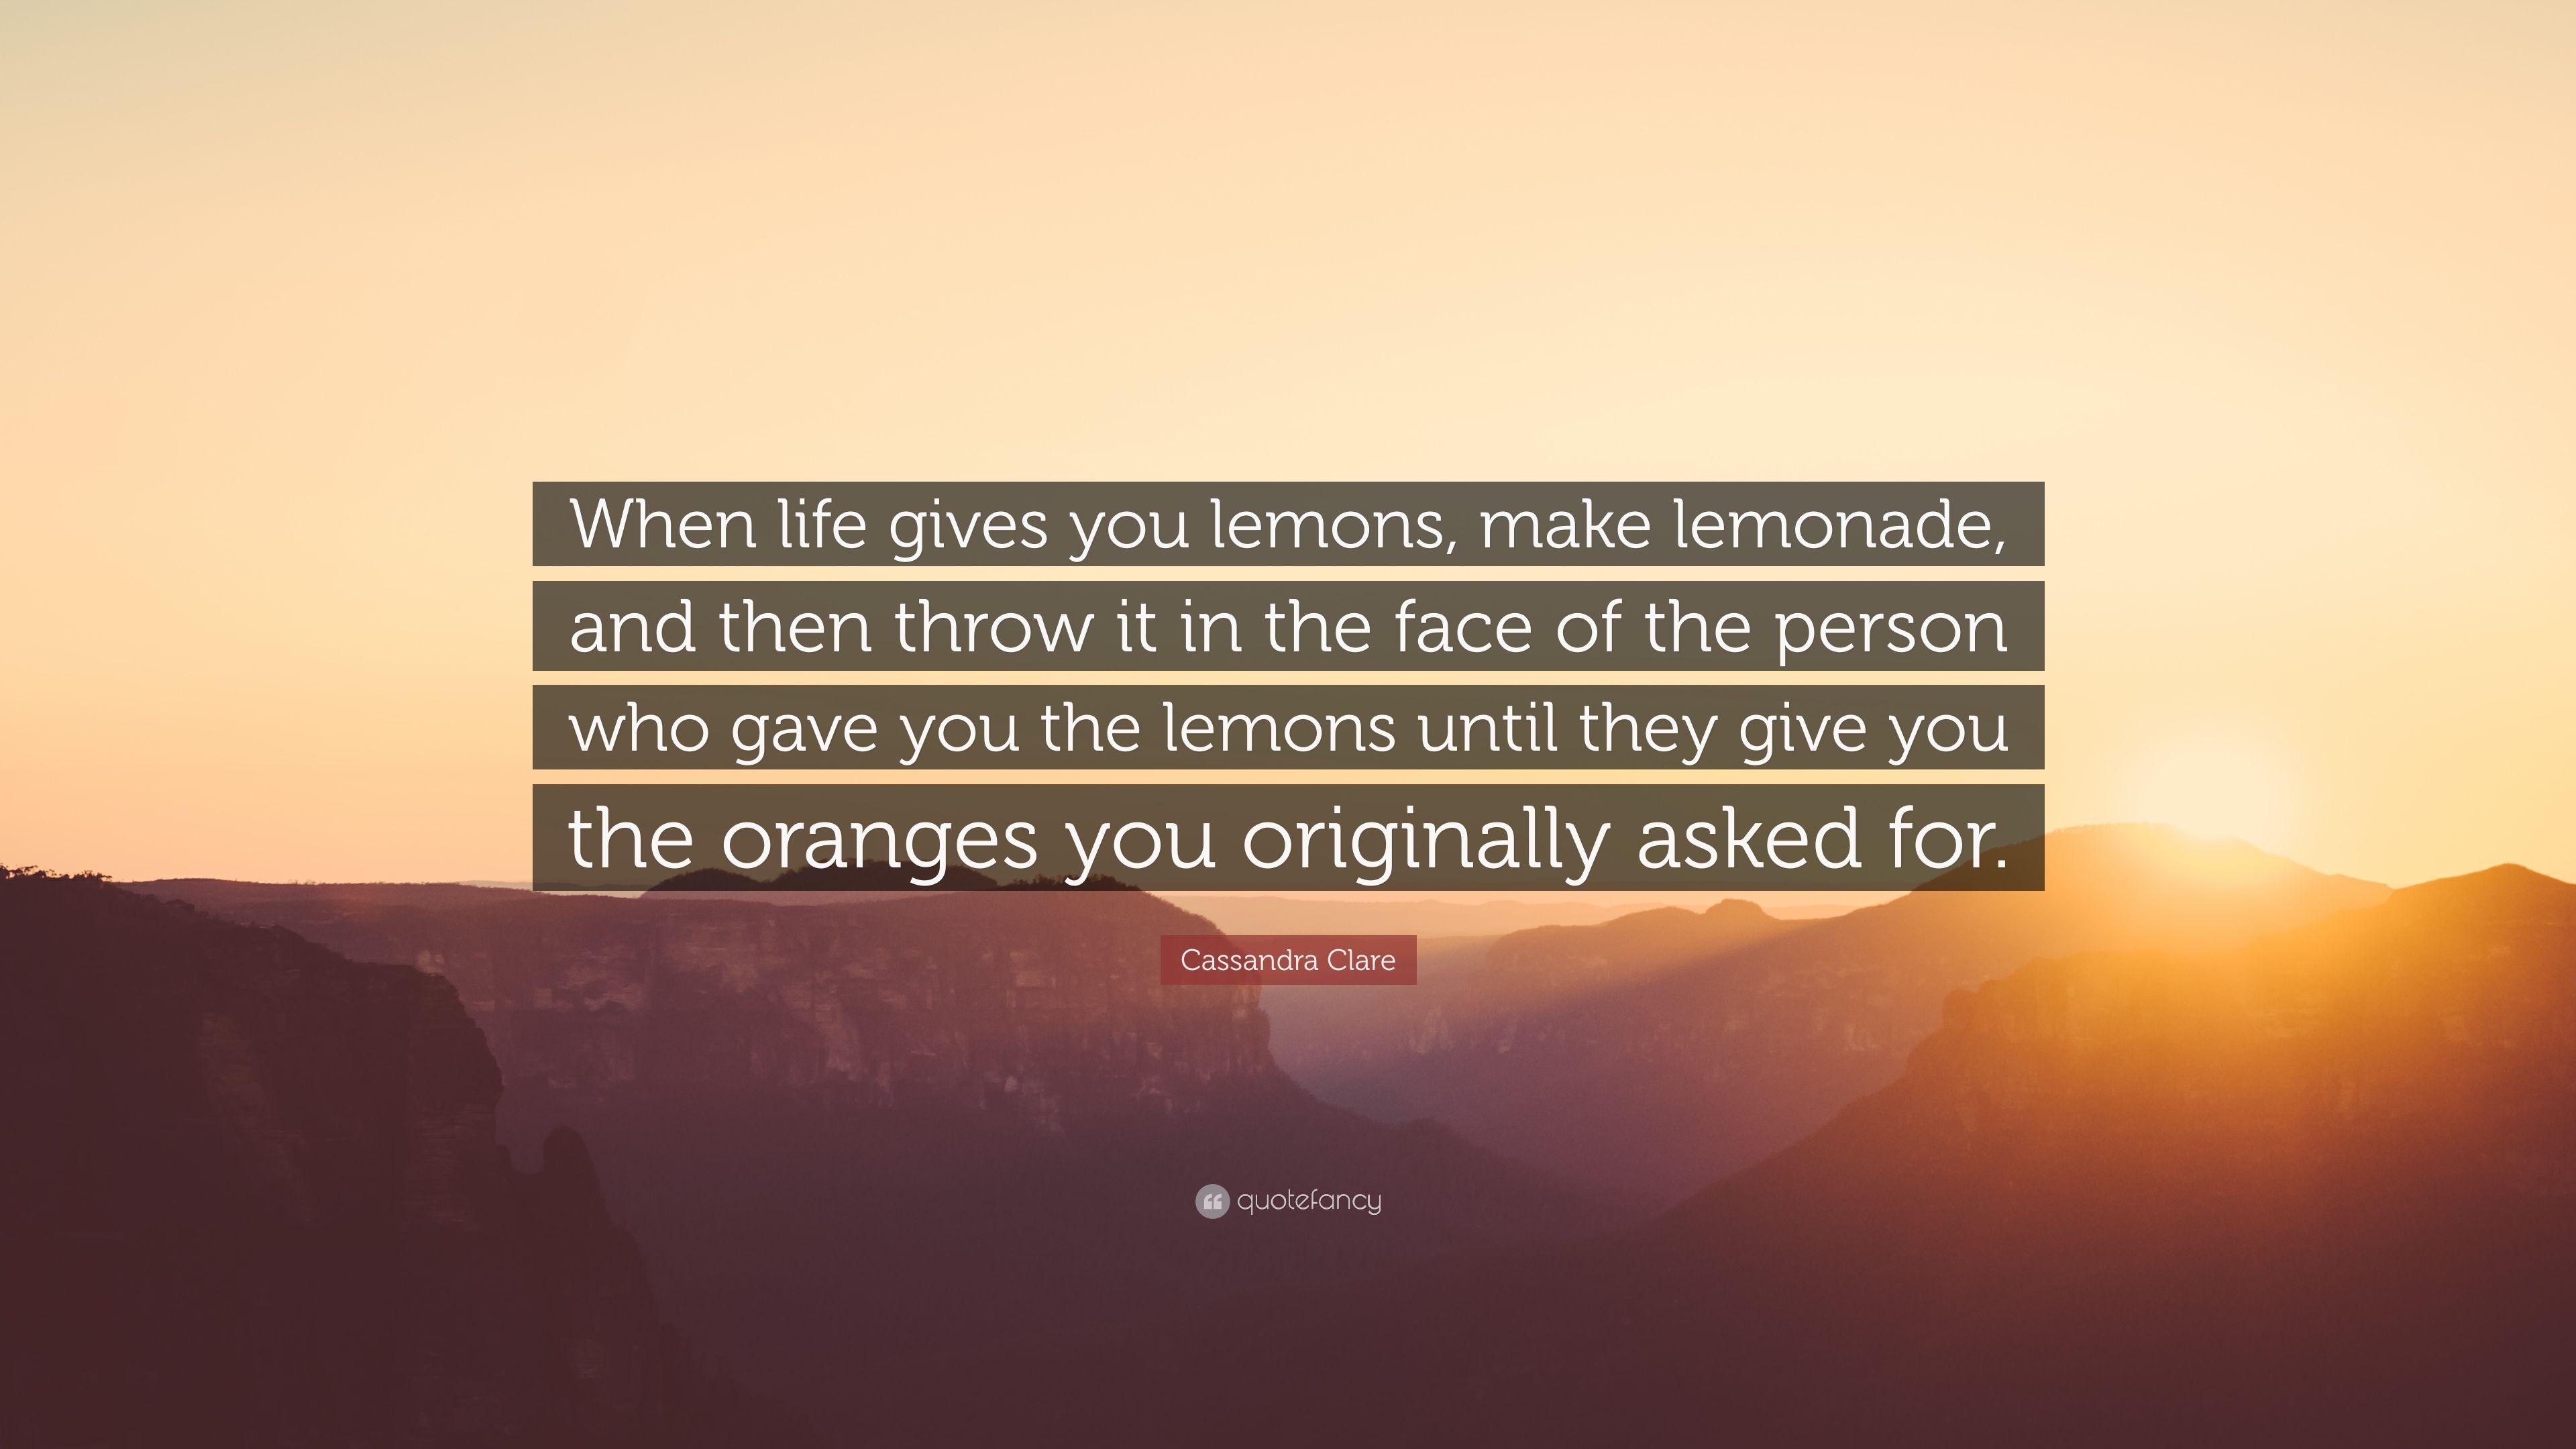 Cassandra Clare Quote: “When life gives you lemons, make lemonade